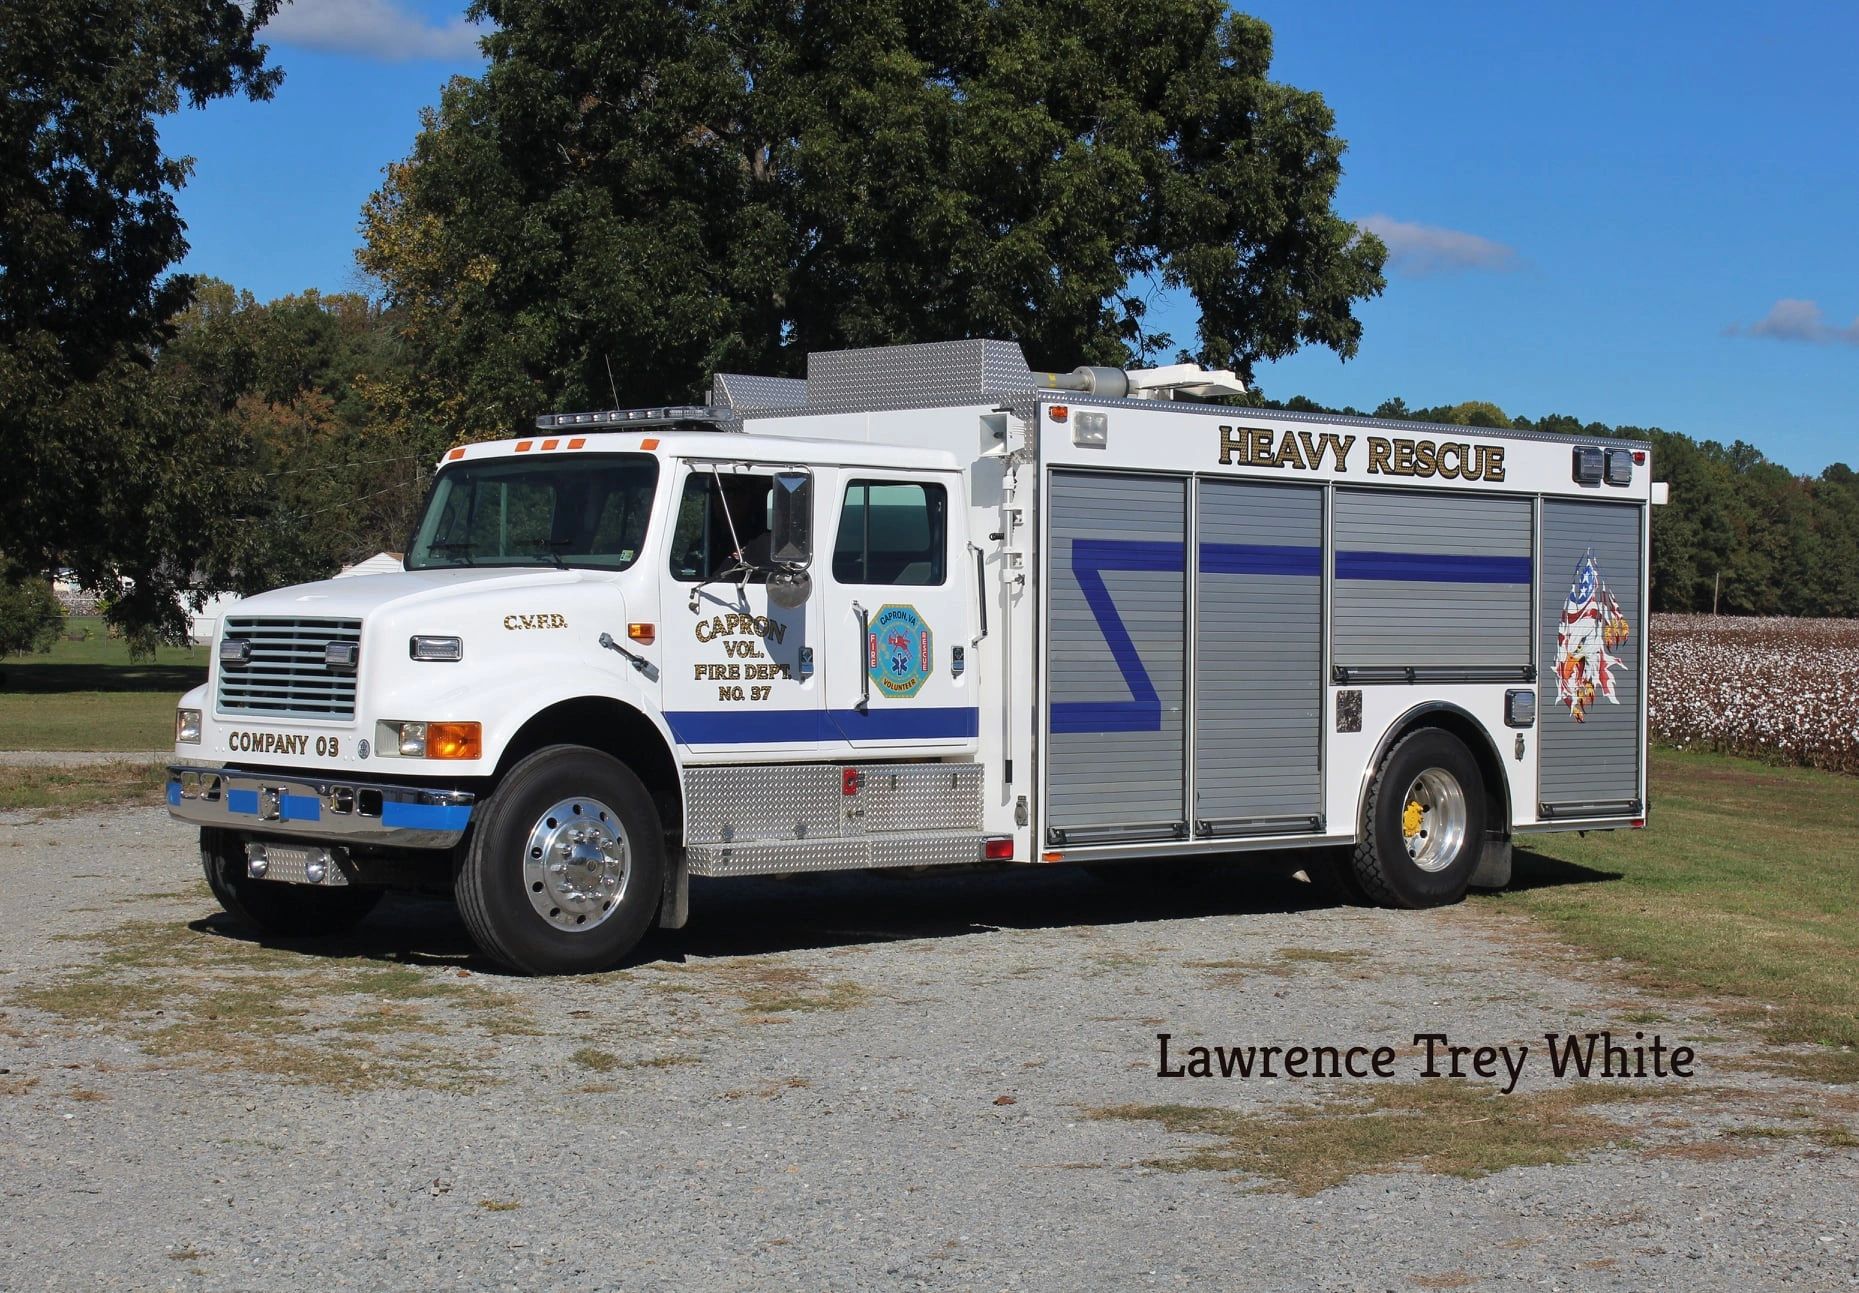 Rescue 37
2000 International 4900- Pierce
ex Huguenot VA ( Powhatan County)
In service August 2021